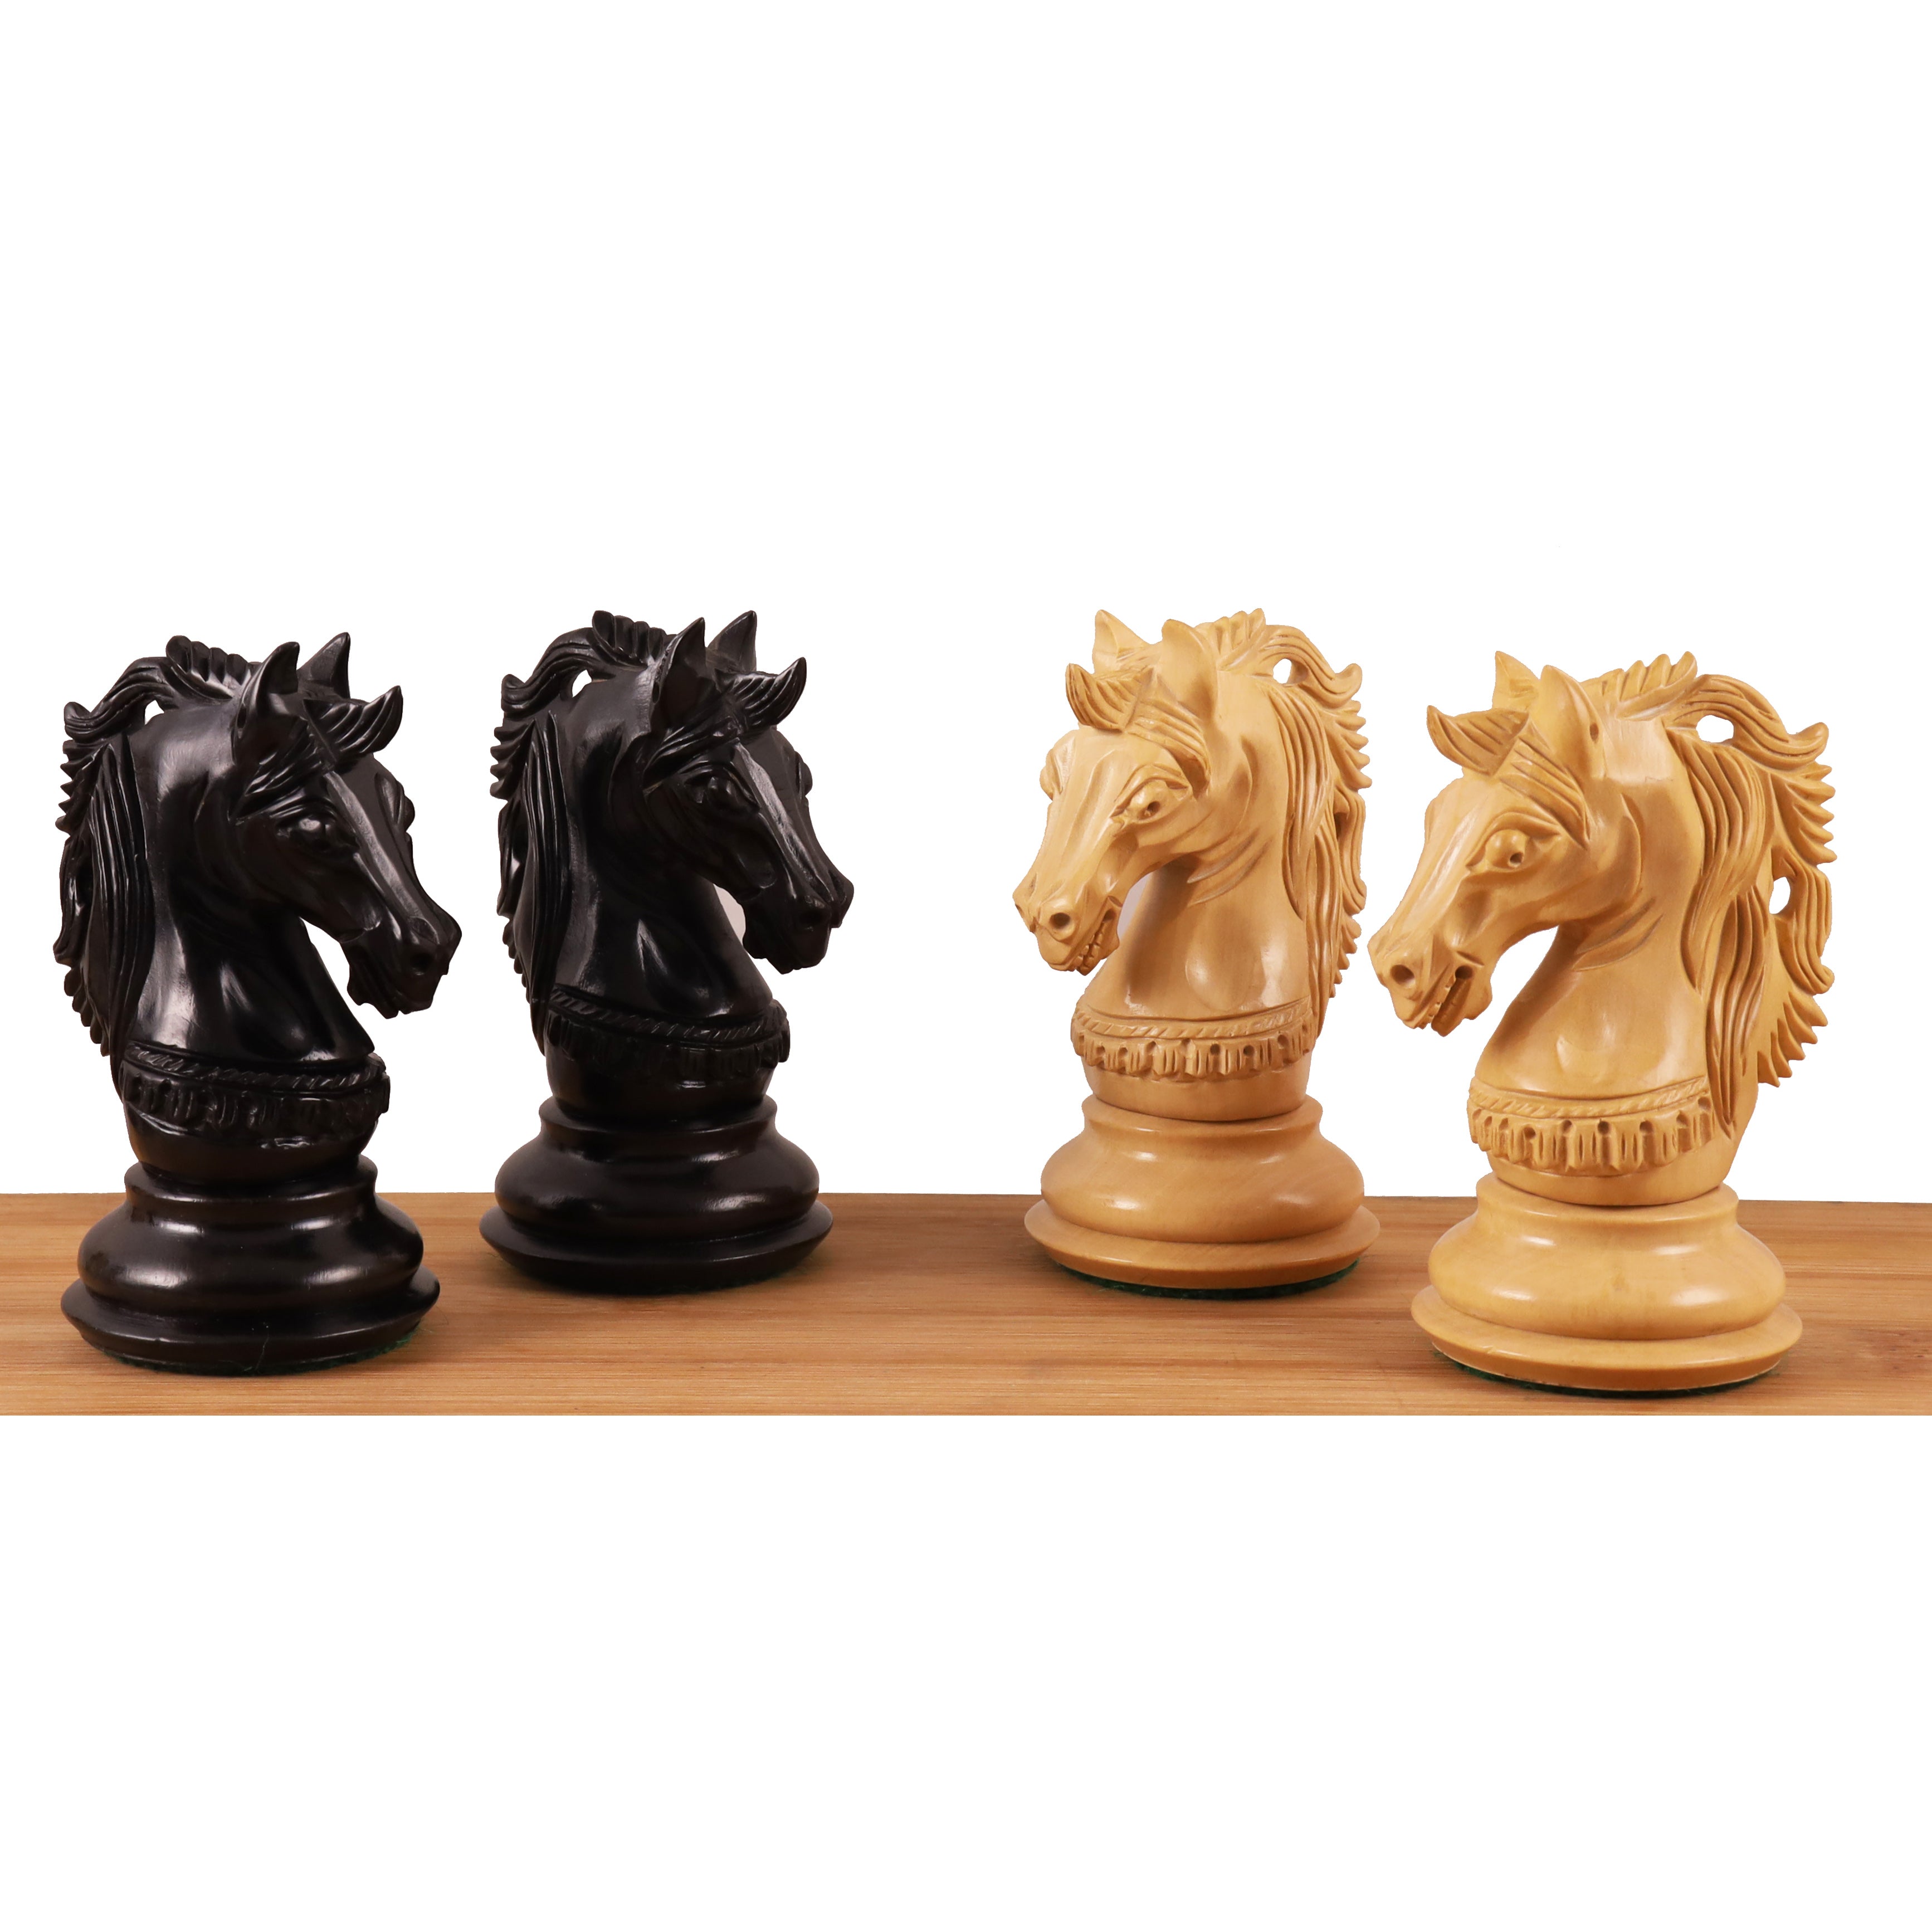 Combo of 4.6" Prestige Luxury Staunton Ebony Chess Pieces with 23" Large Ebony & Maple Wood Chessboard and Storage Box